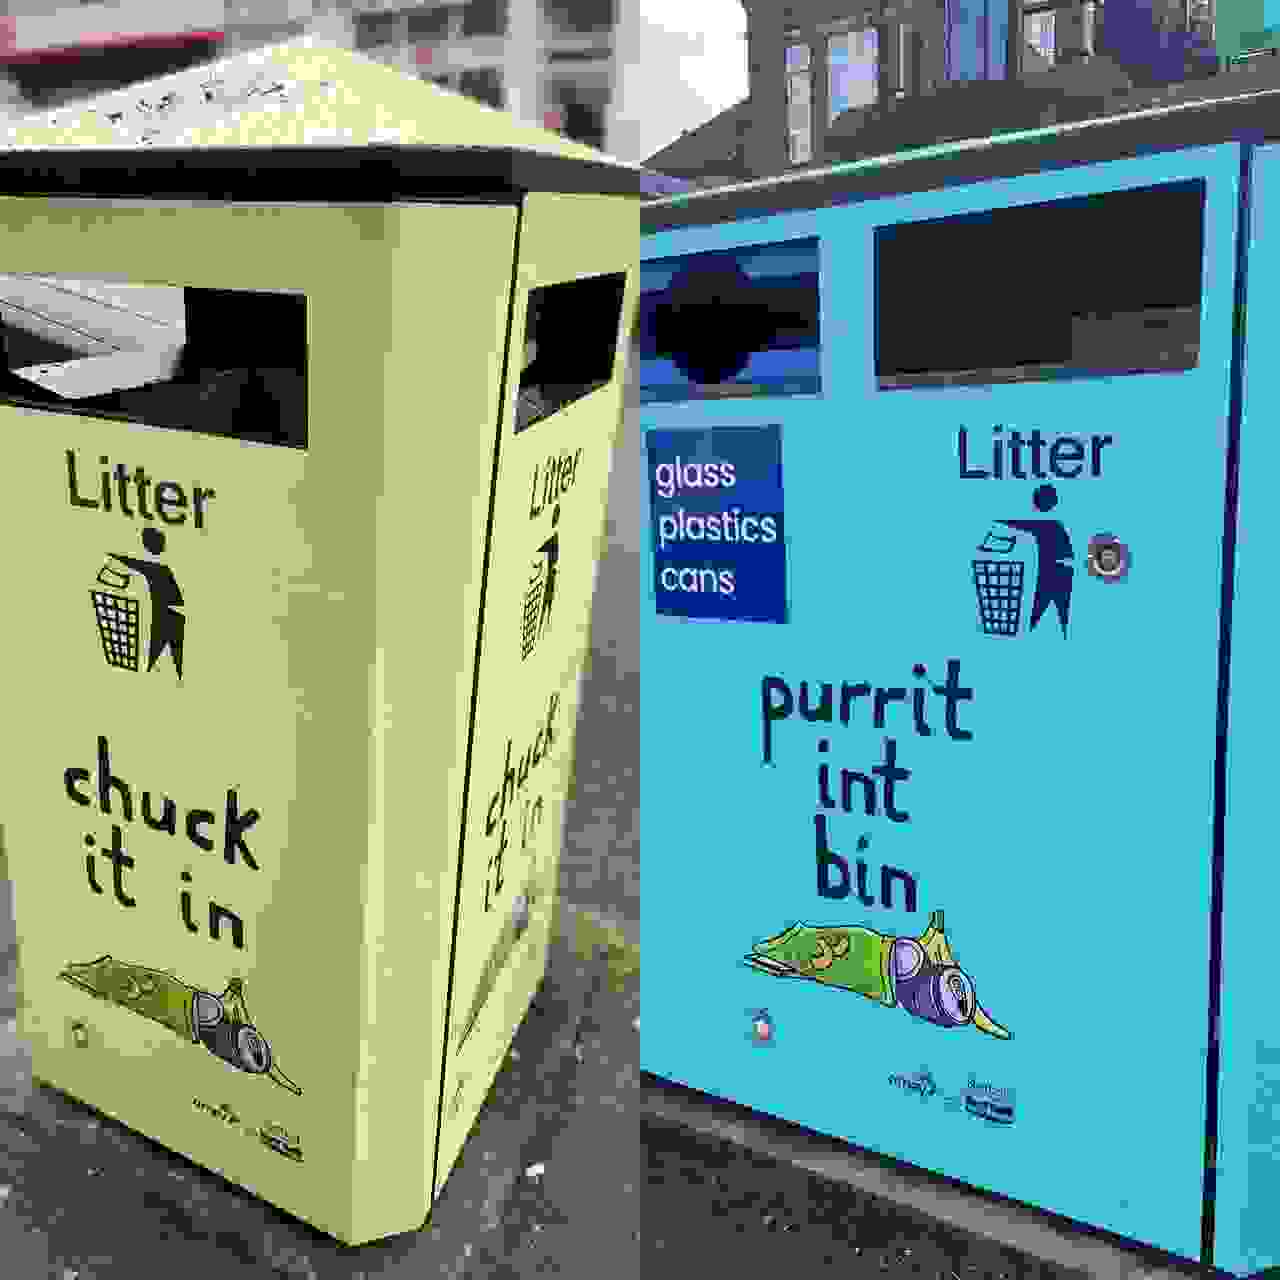 Three people lean on bright blue bin with 'purrit int bin' wording